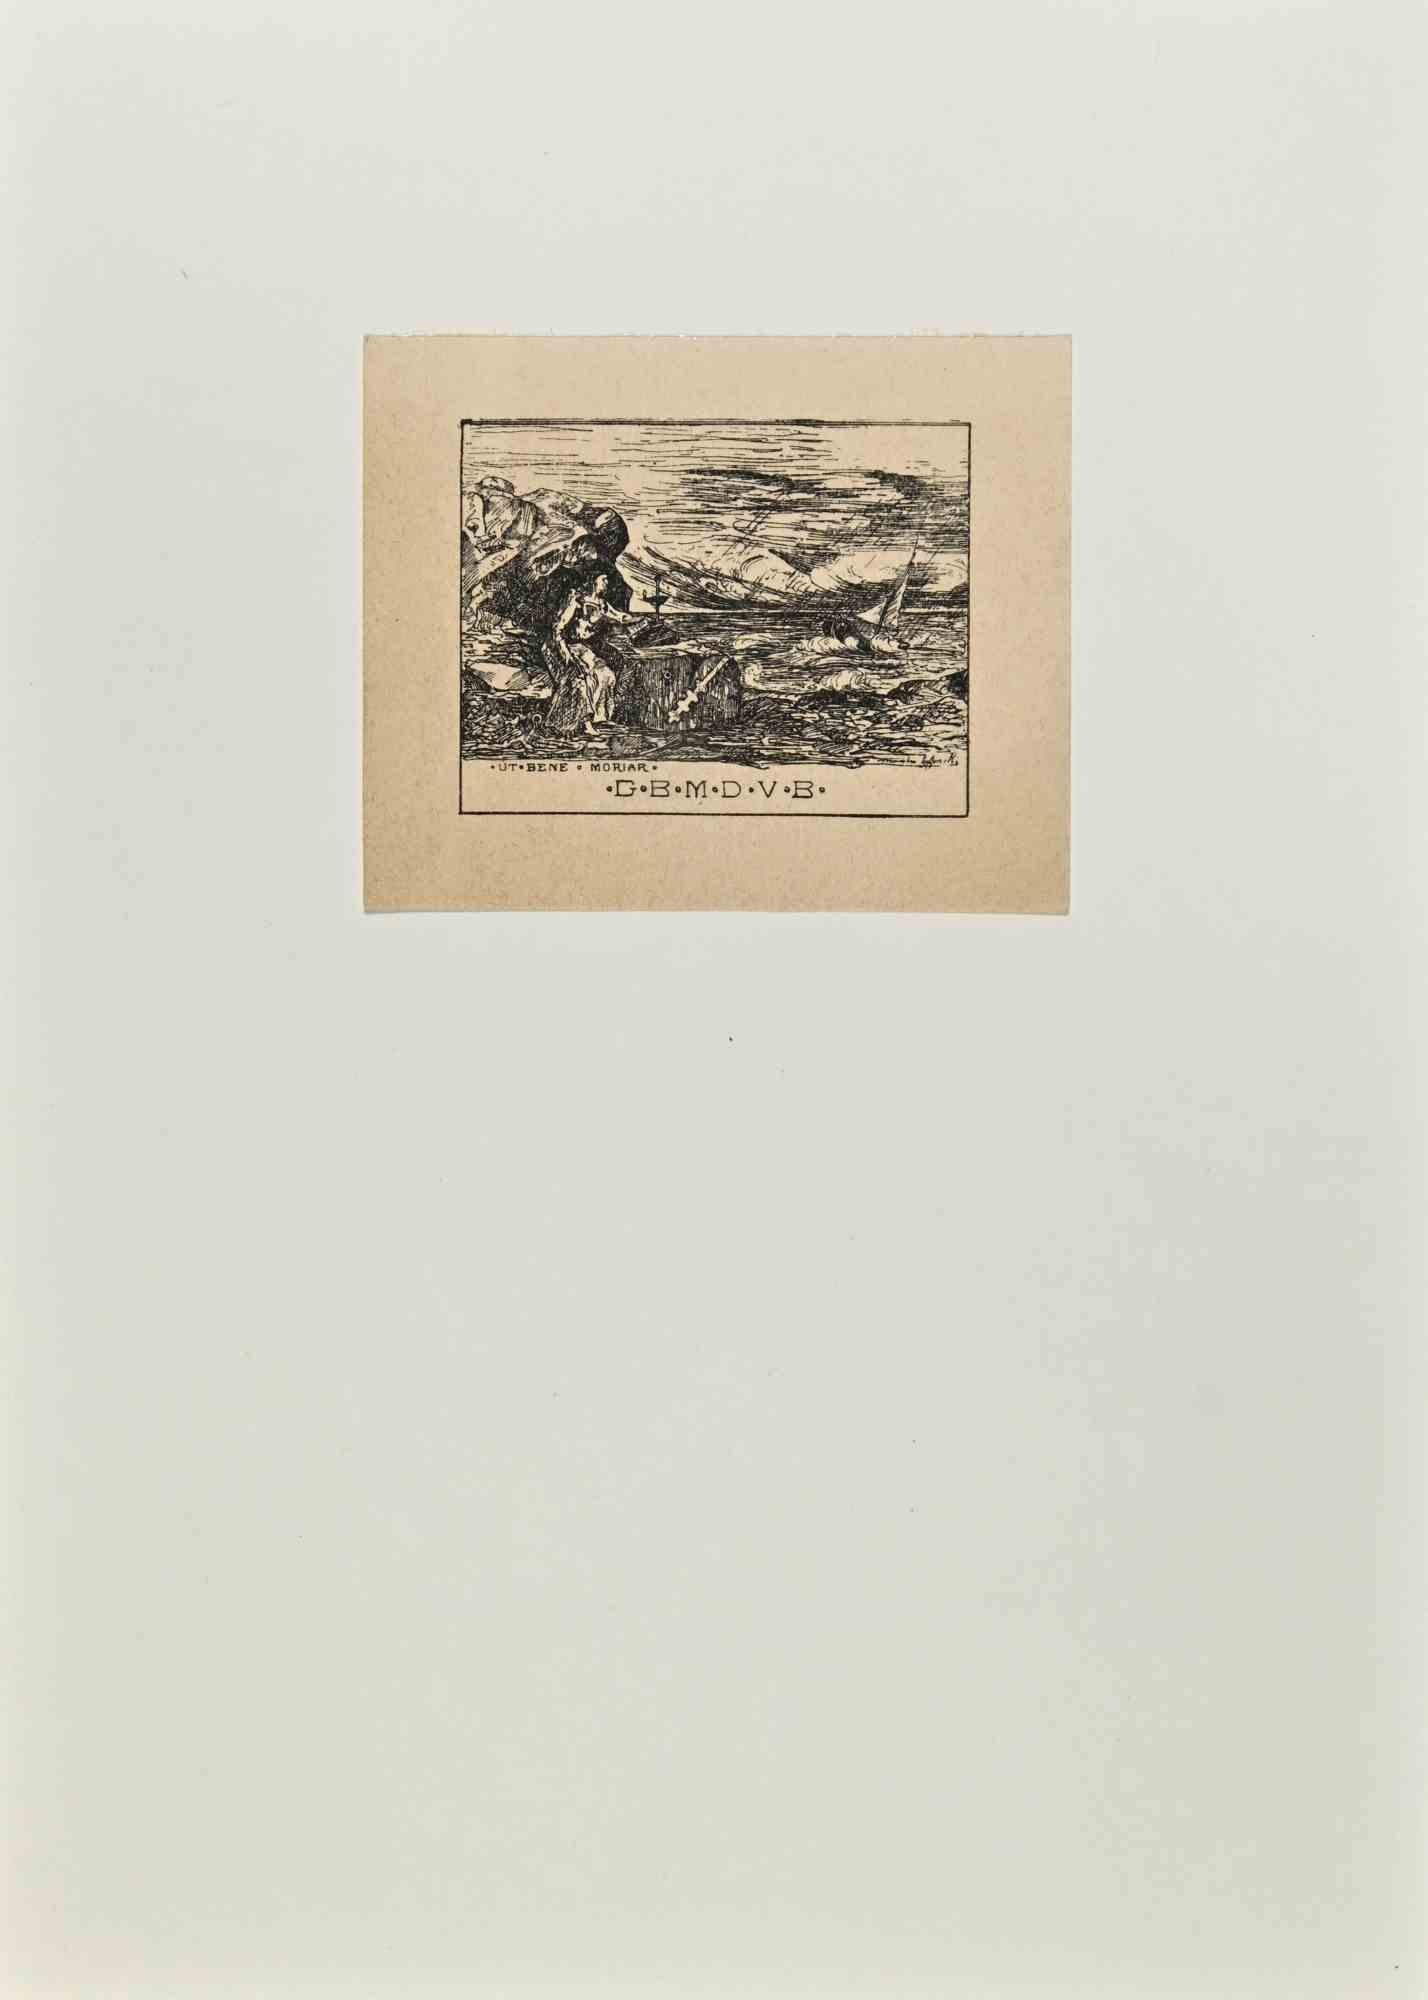 Ex-Libris – G.B.M.D.V.B. Holzschnitt – Mitte des 20. Jahrhunderts